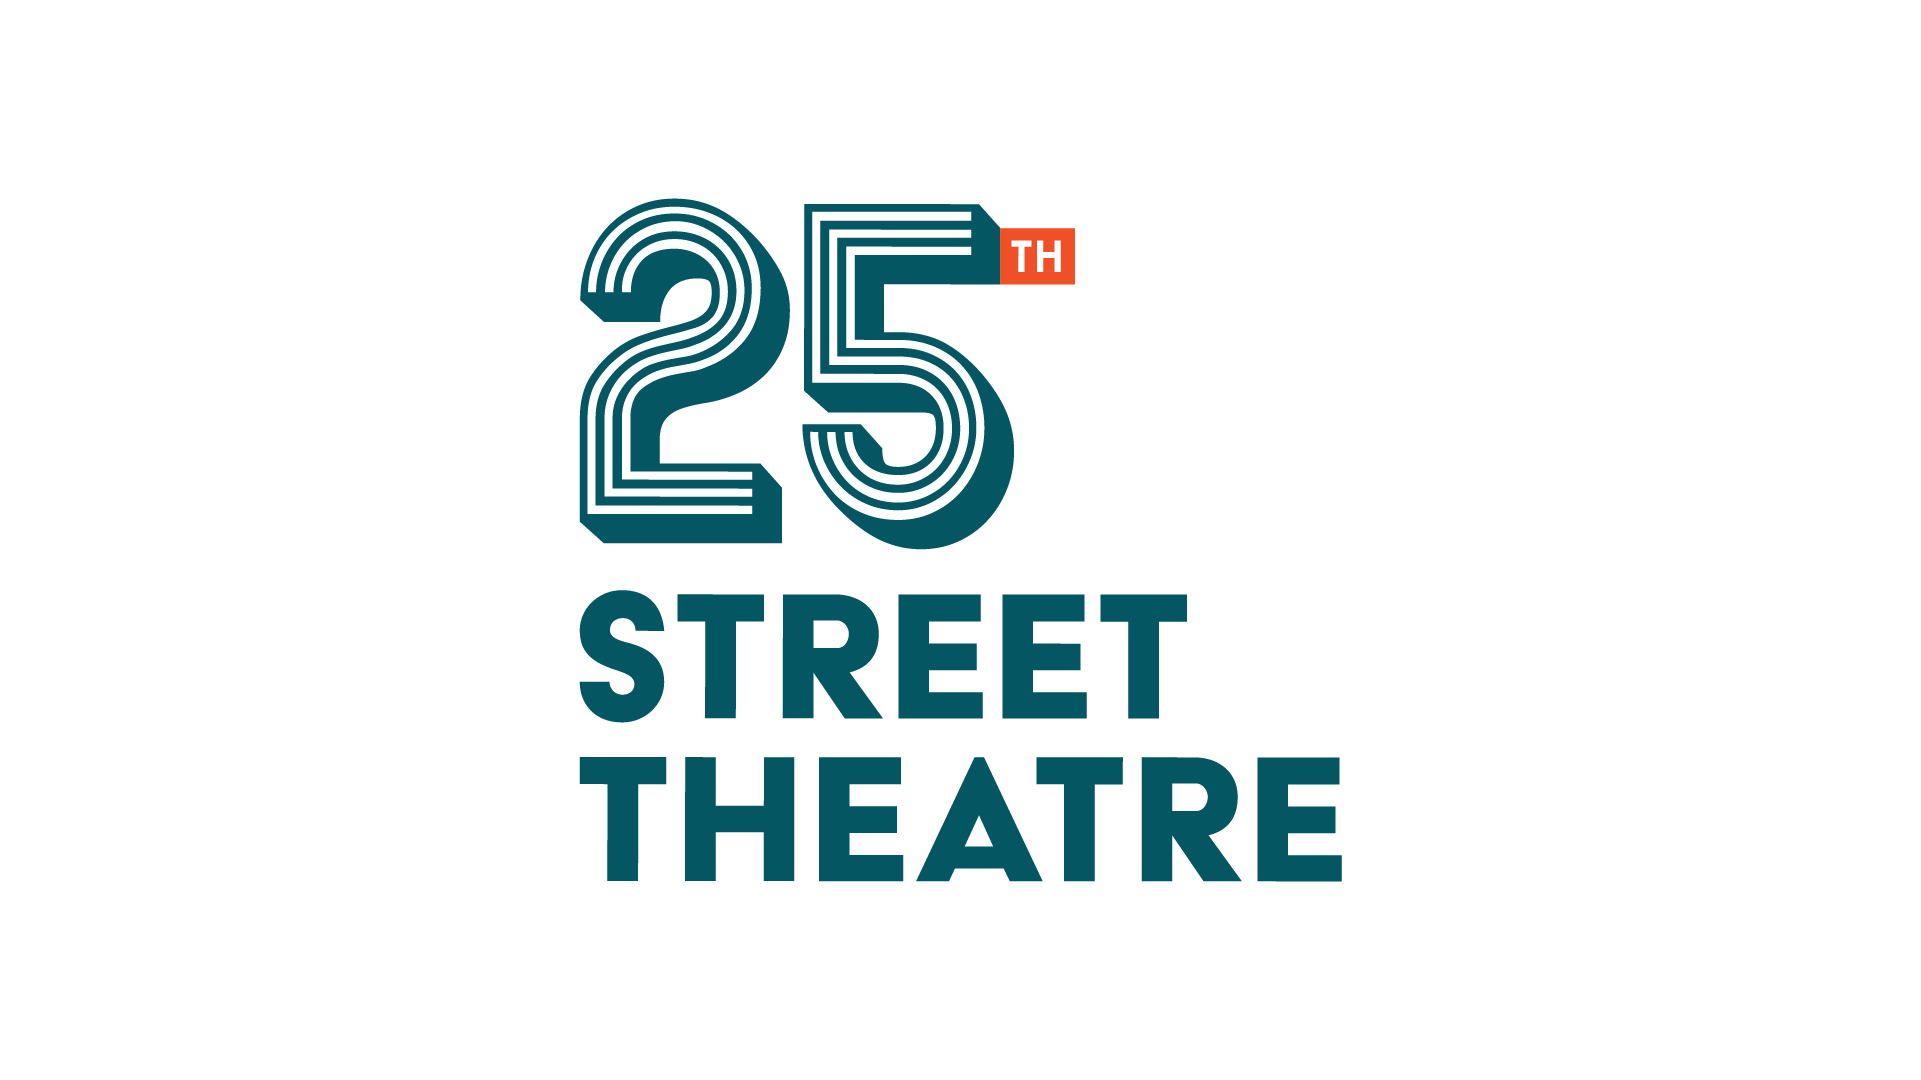 25th Street Theatre logo